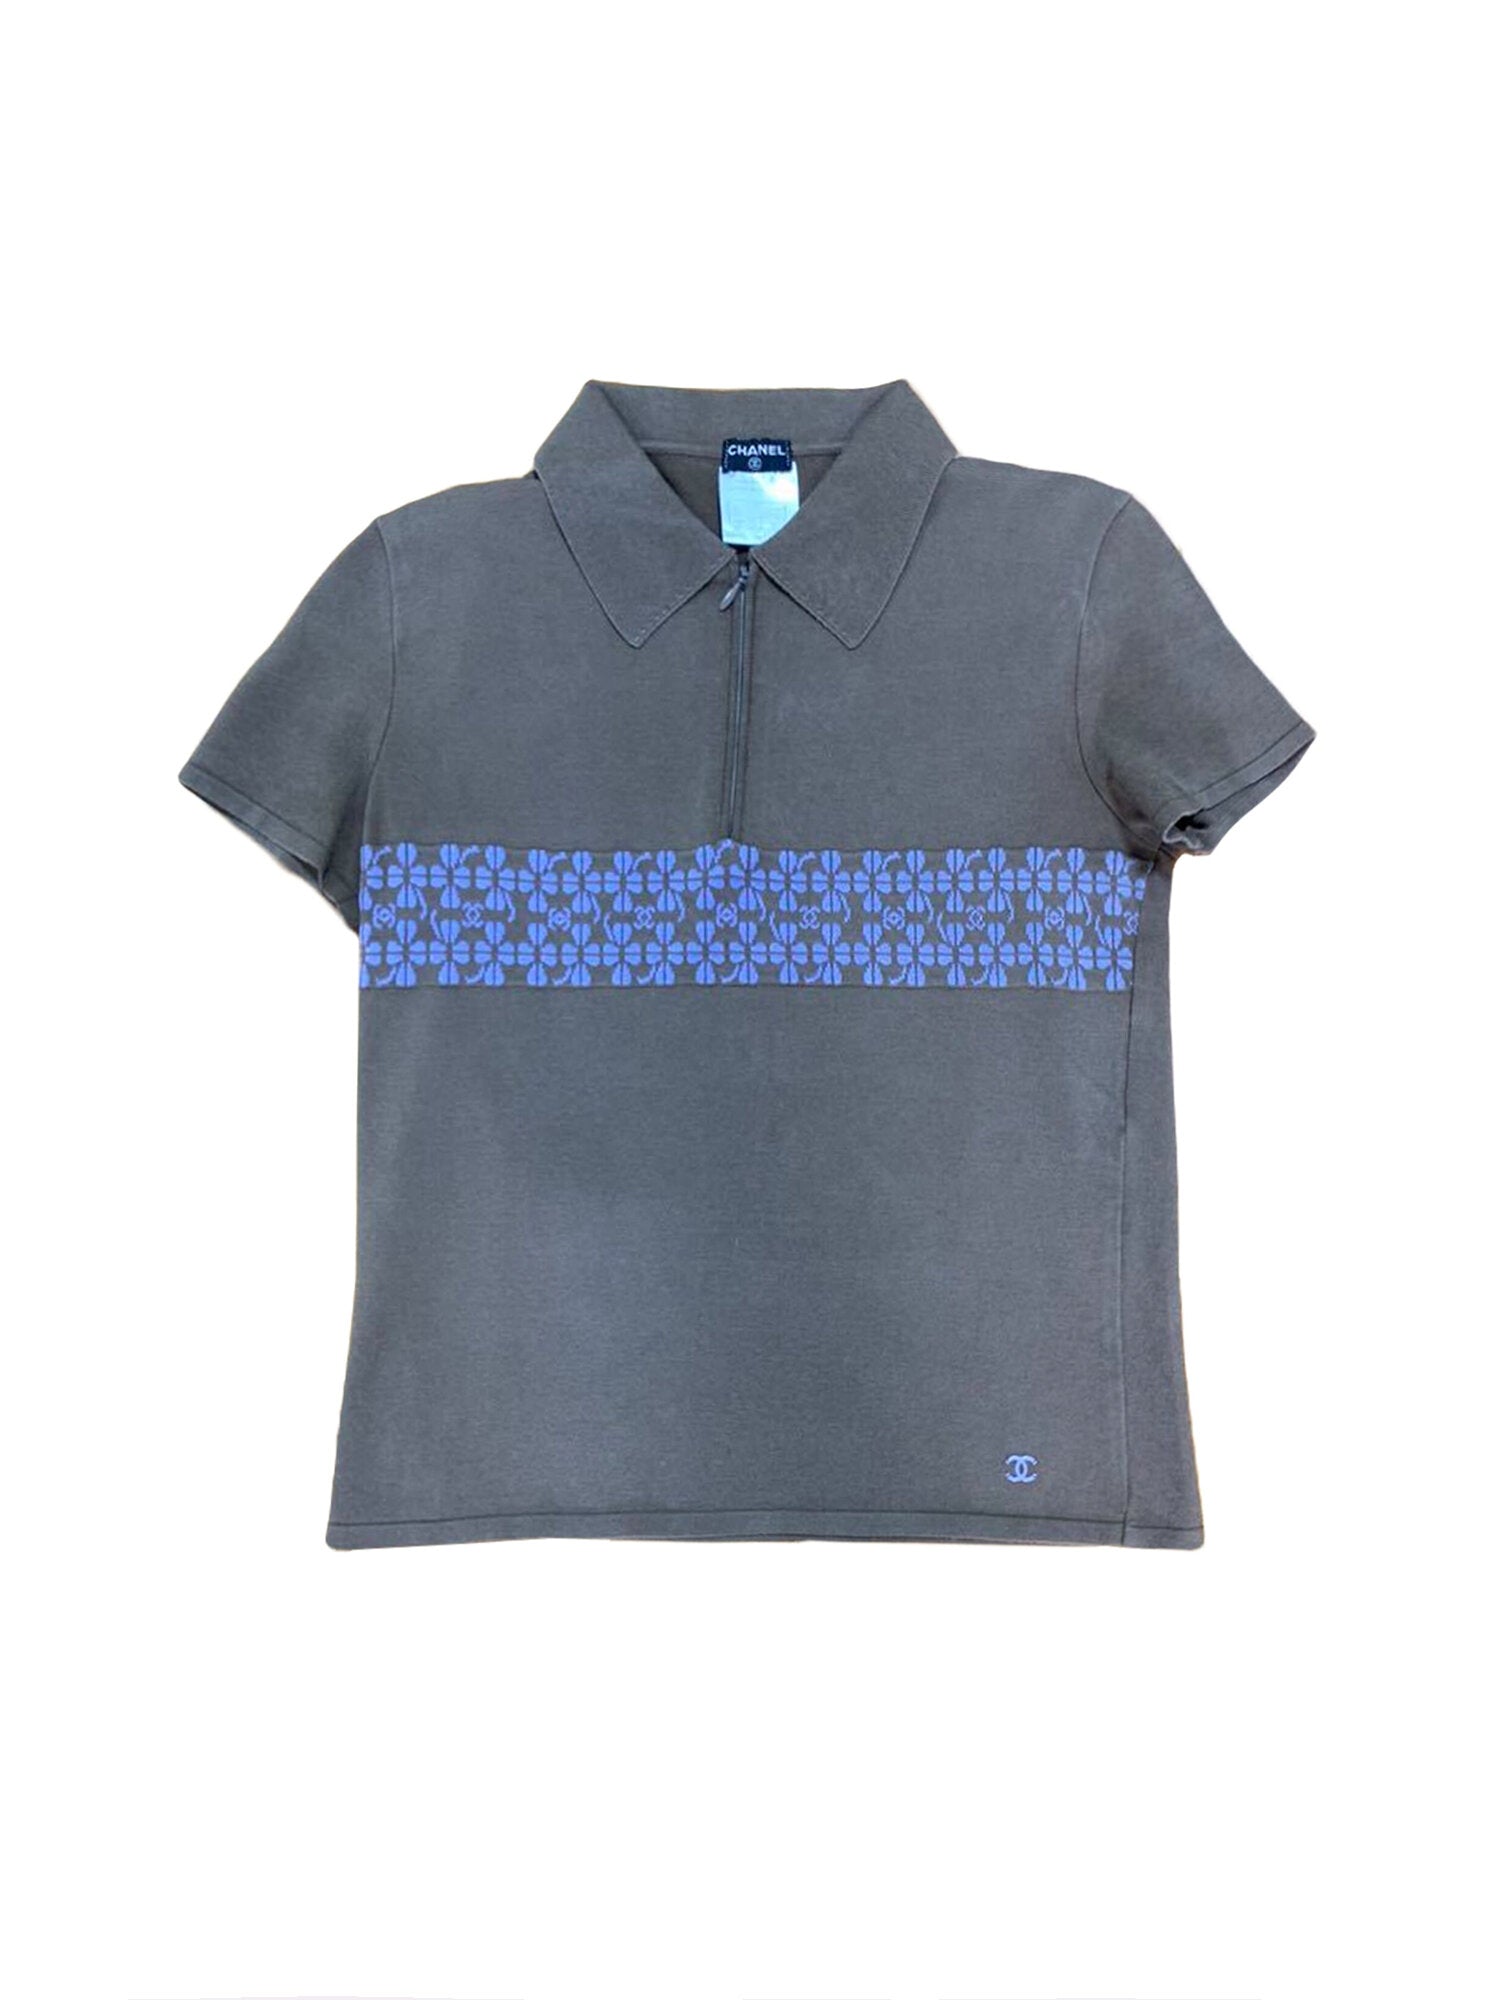 Louis Vuitton 2000s Blue Monogram Dress Shirt · INTO